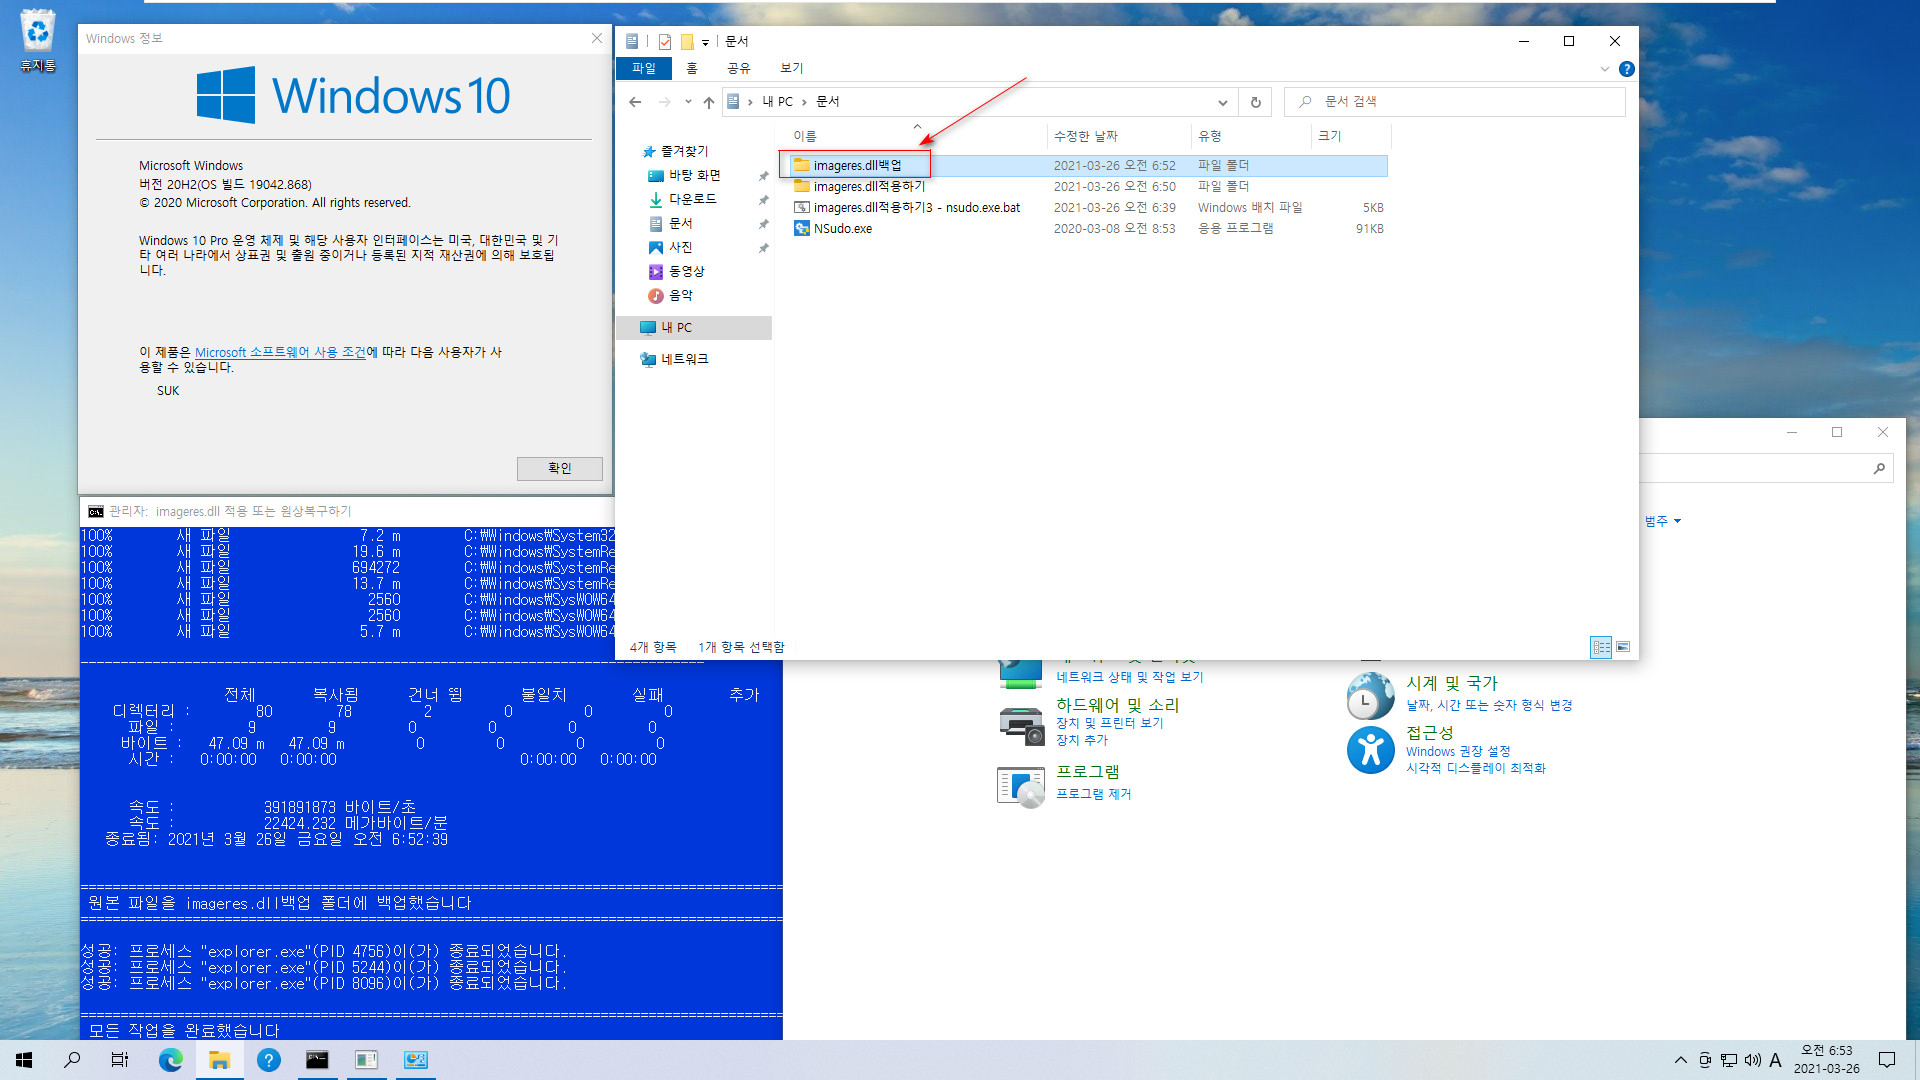 imageres.dll적용하기3 - nsudo.bat 테스트 - Windows 10 인사이더 프리뷰, 버전 21H2 추정, 빌드 21343.1000, PRO x64의 아이콘 적용하기 - 버전 21H1, 버전 20H2와 버전 2004까지 32비트 윈도우도 적용됩니다 2021-03-26_065336.jpg